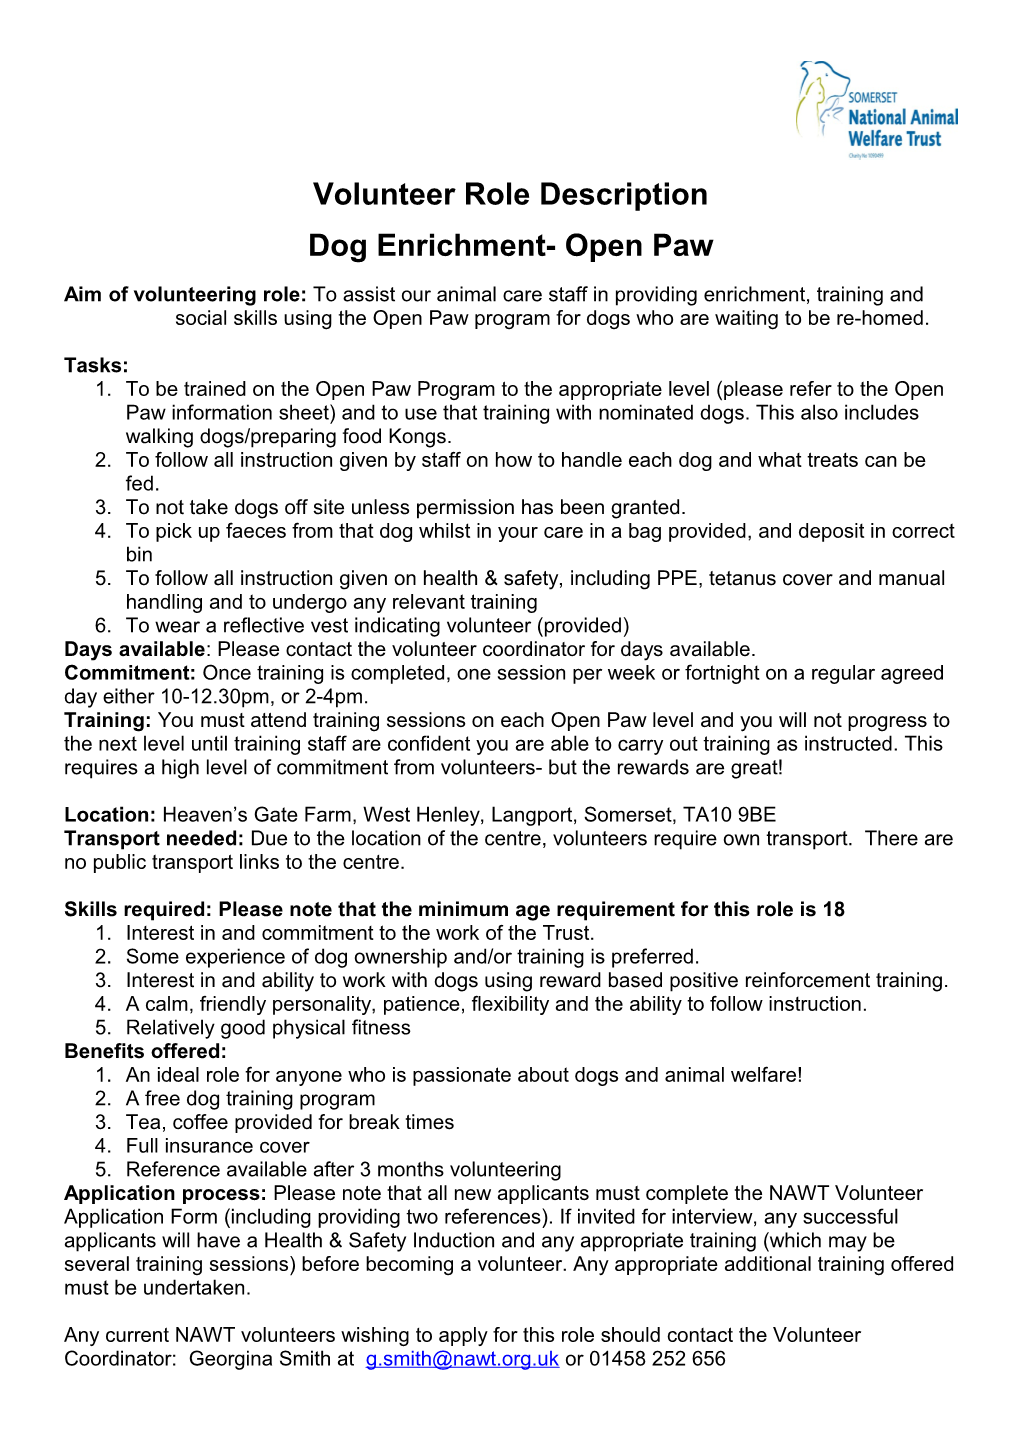 Dog Enrichment- Open Paw